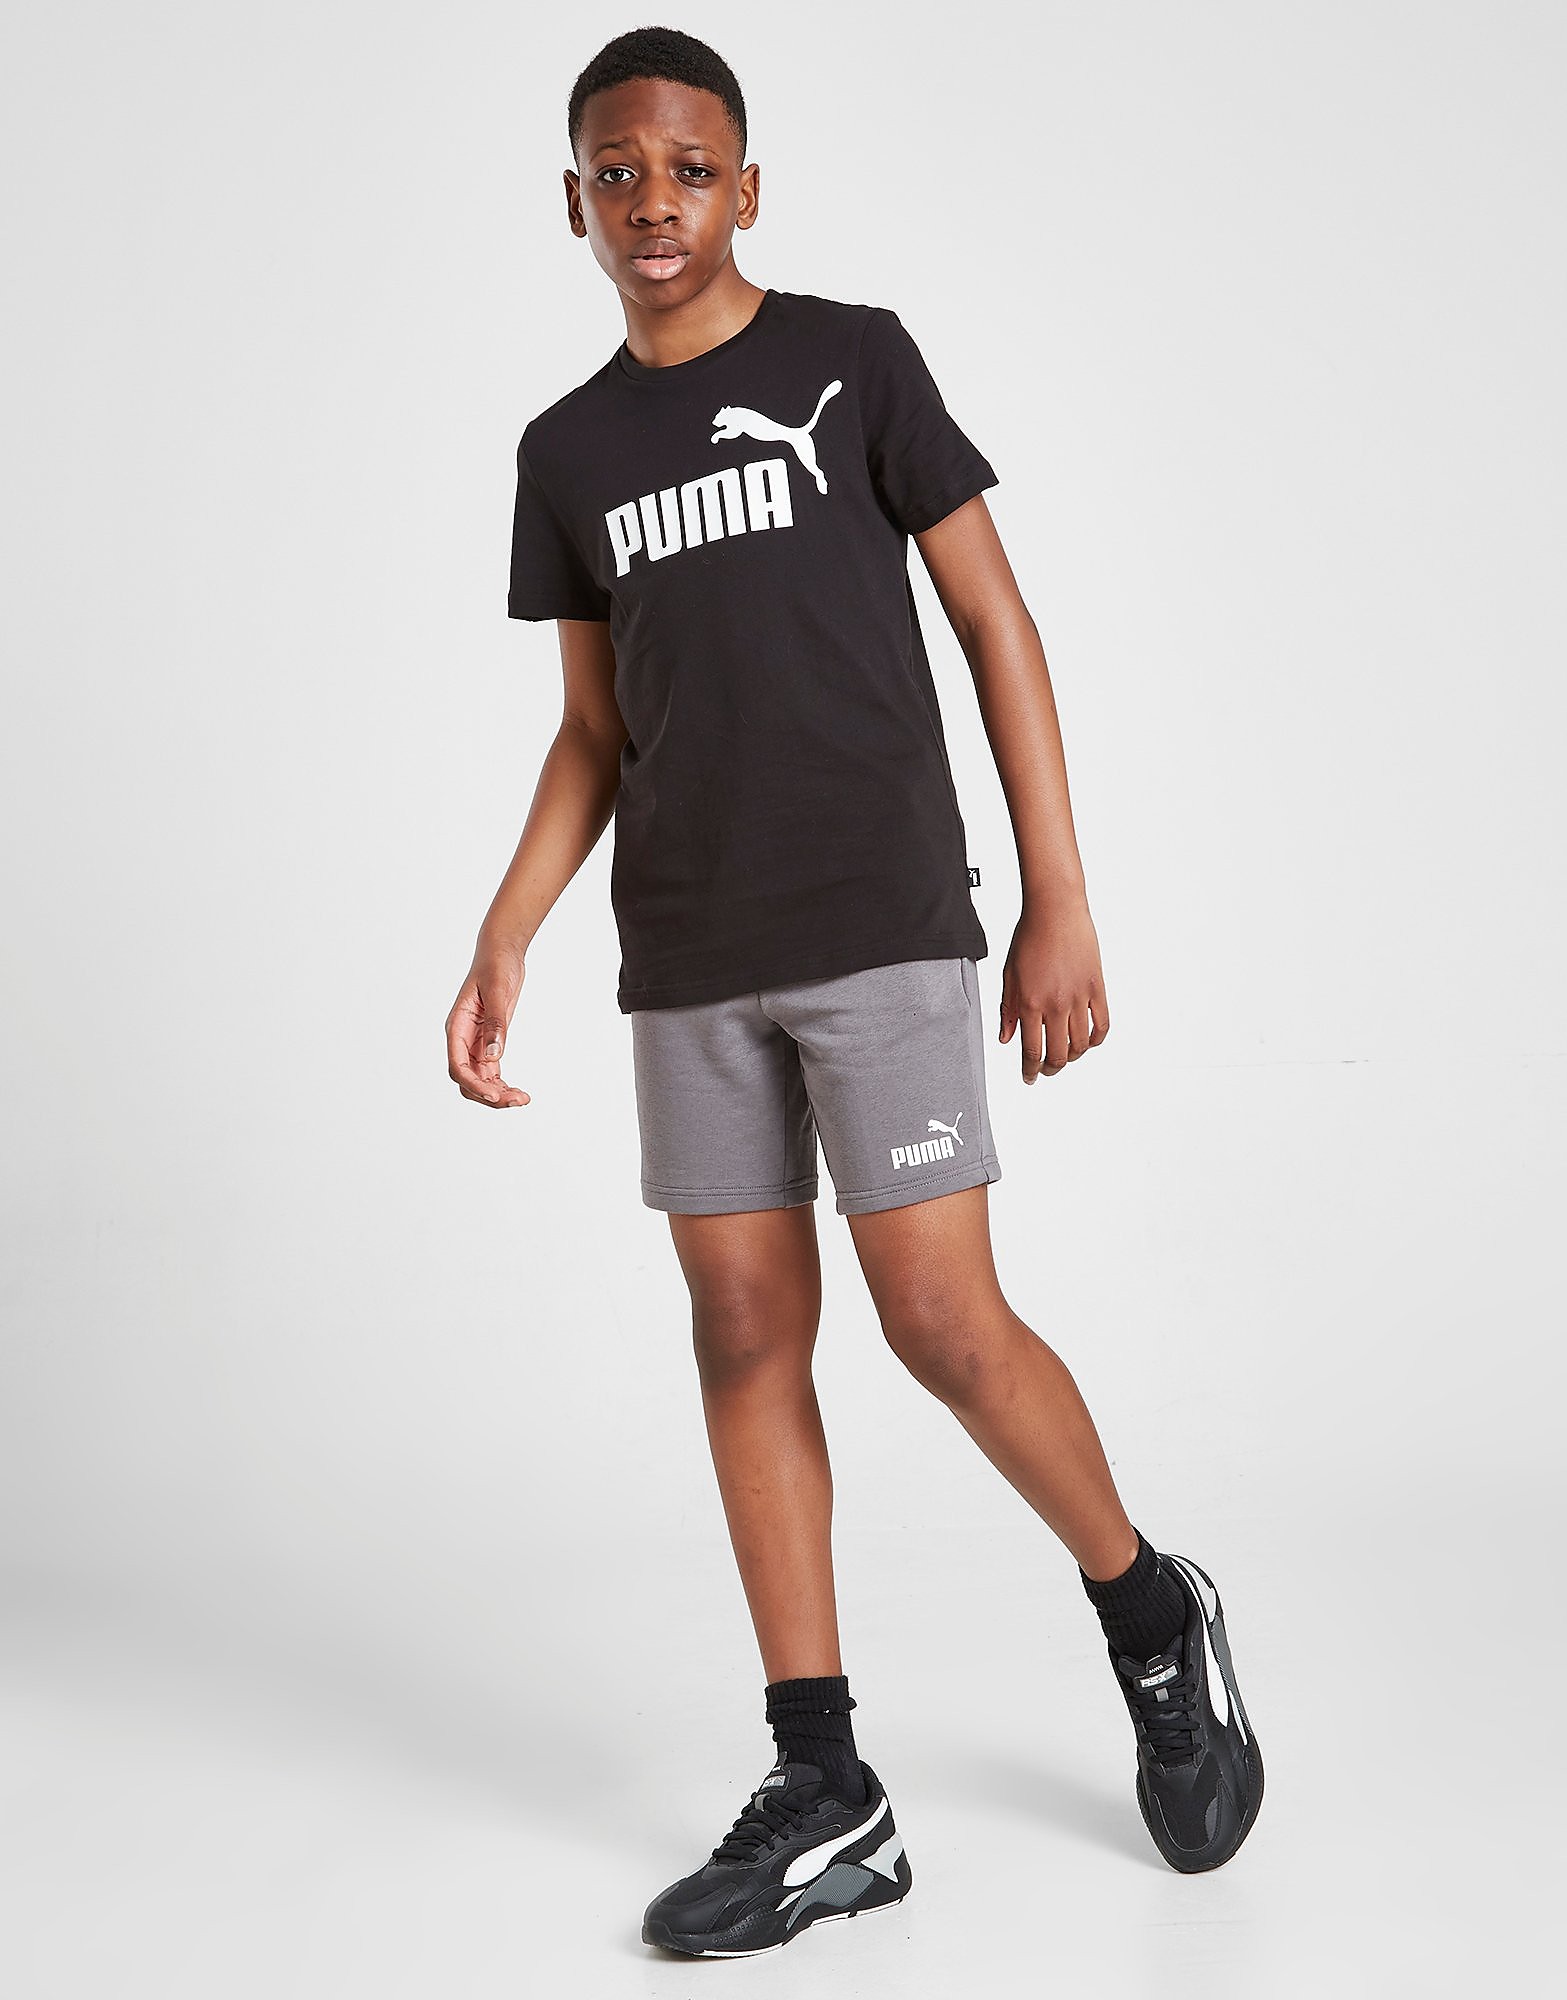 Puma shortsit juniorit - kids, harmaa, puma